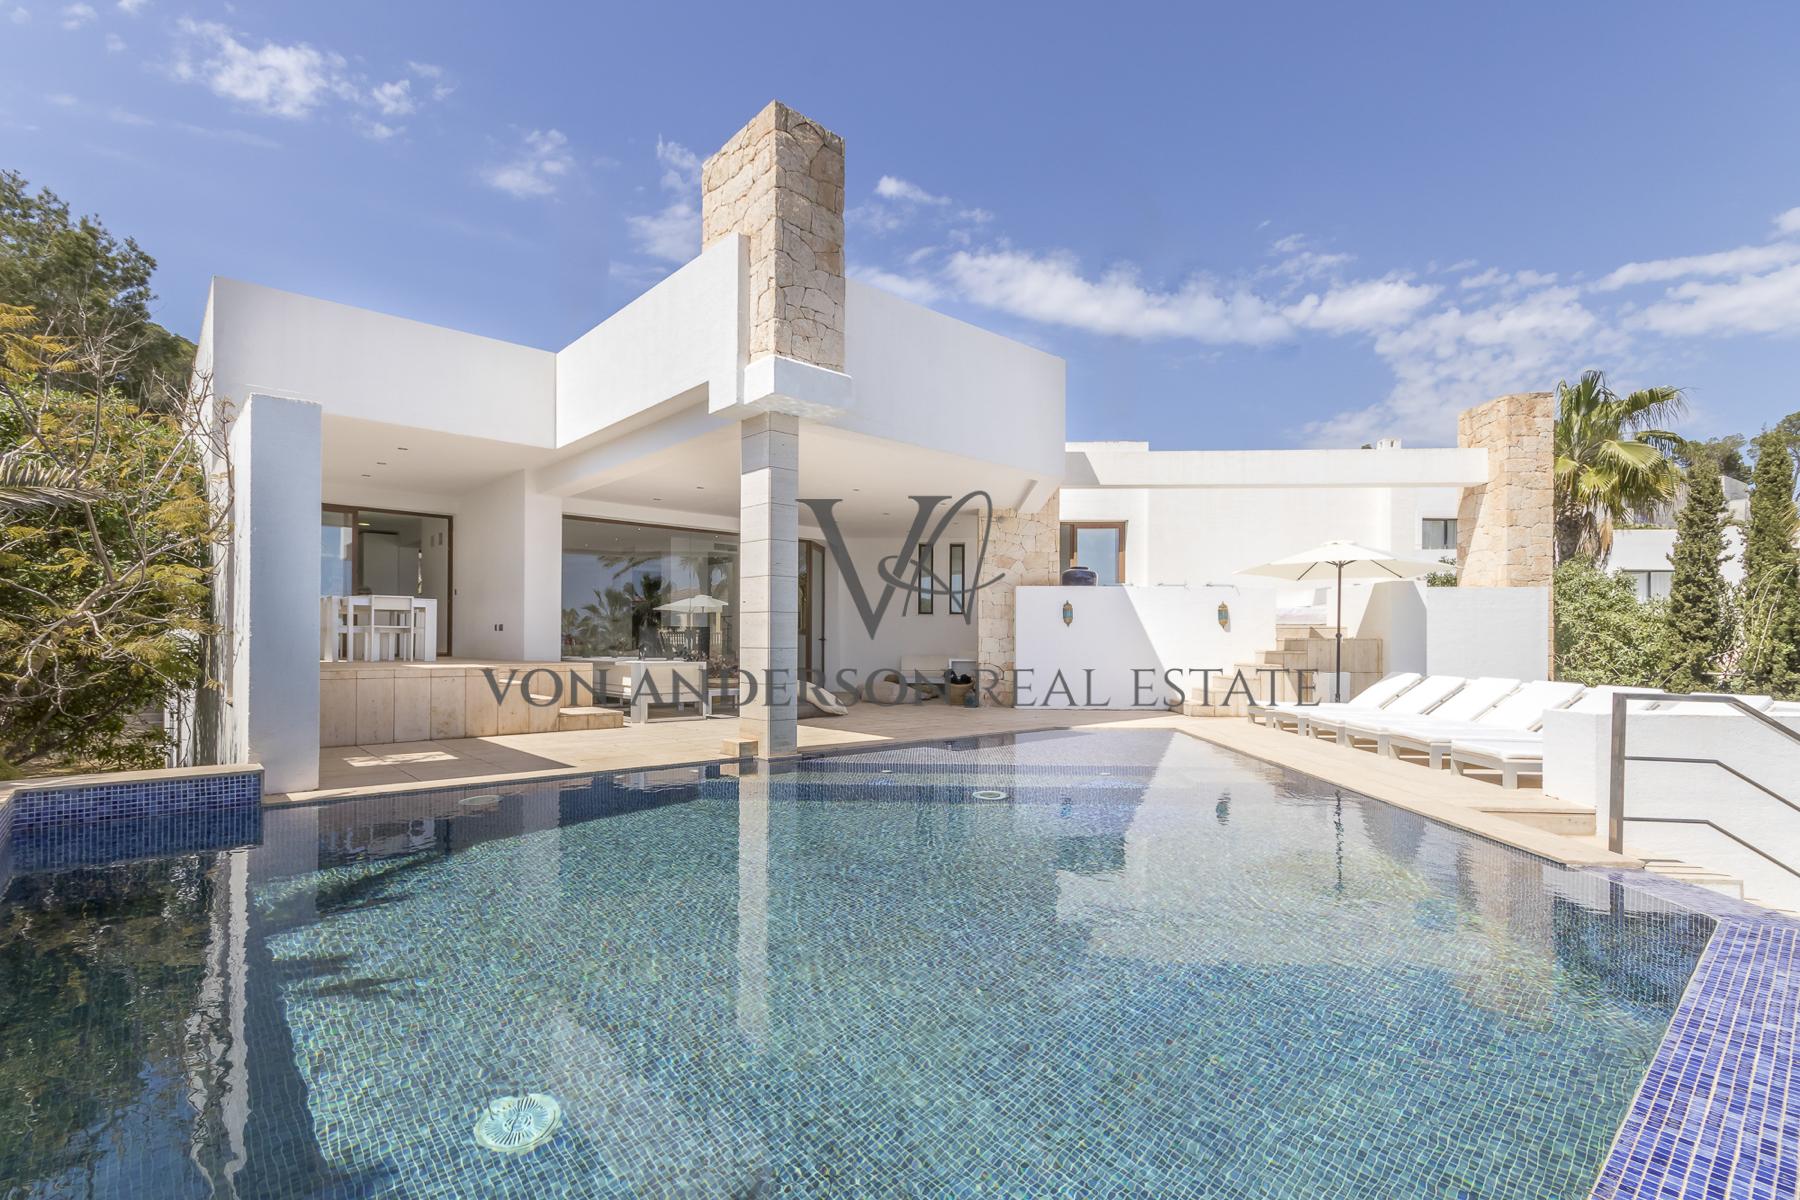 Exquisite Modern Villa Close to Es Cubells Boasting Panoramic Sea Views, ref. VA1055, for sale in Ibiza by Von Anderson Real Estate